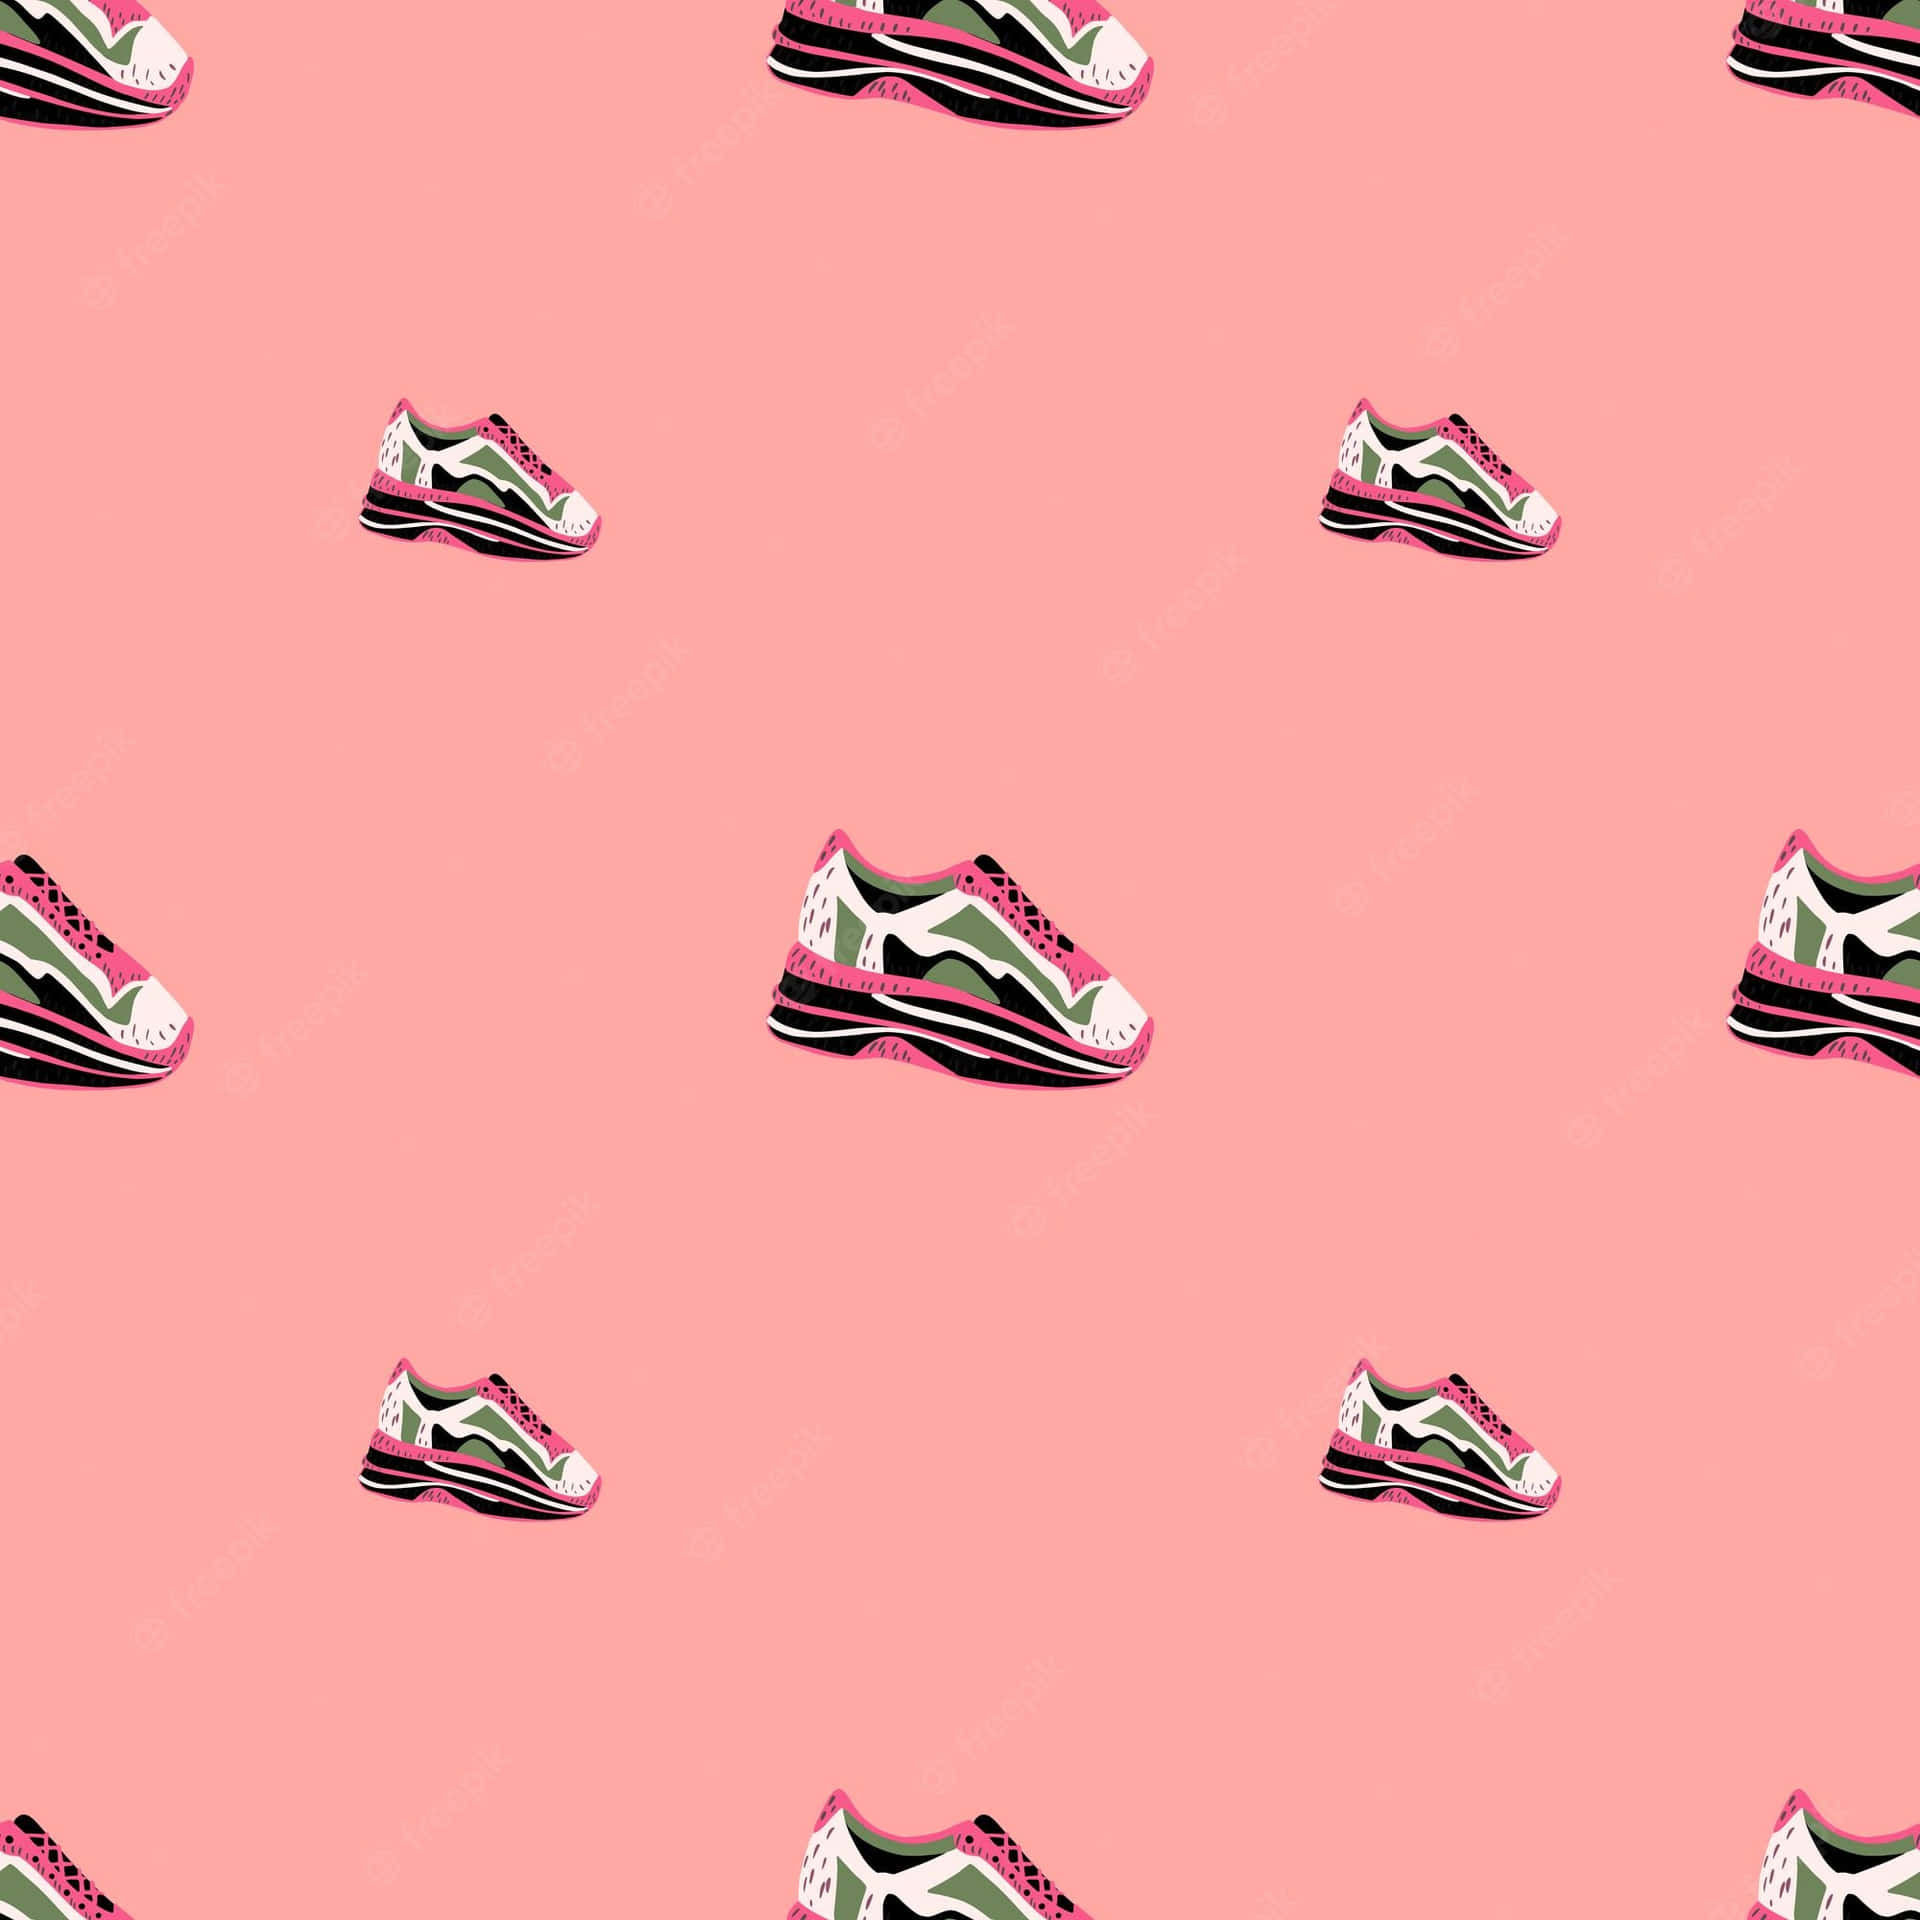 Attage 'sneakerhead' Stilen Til Det Næste Niveau Wallpaper